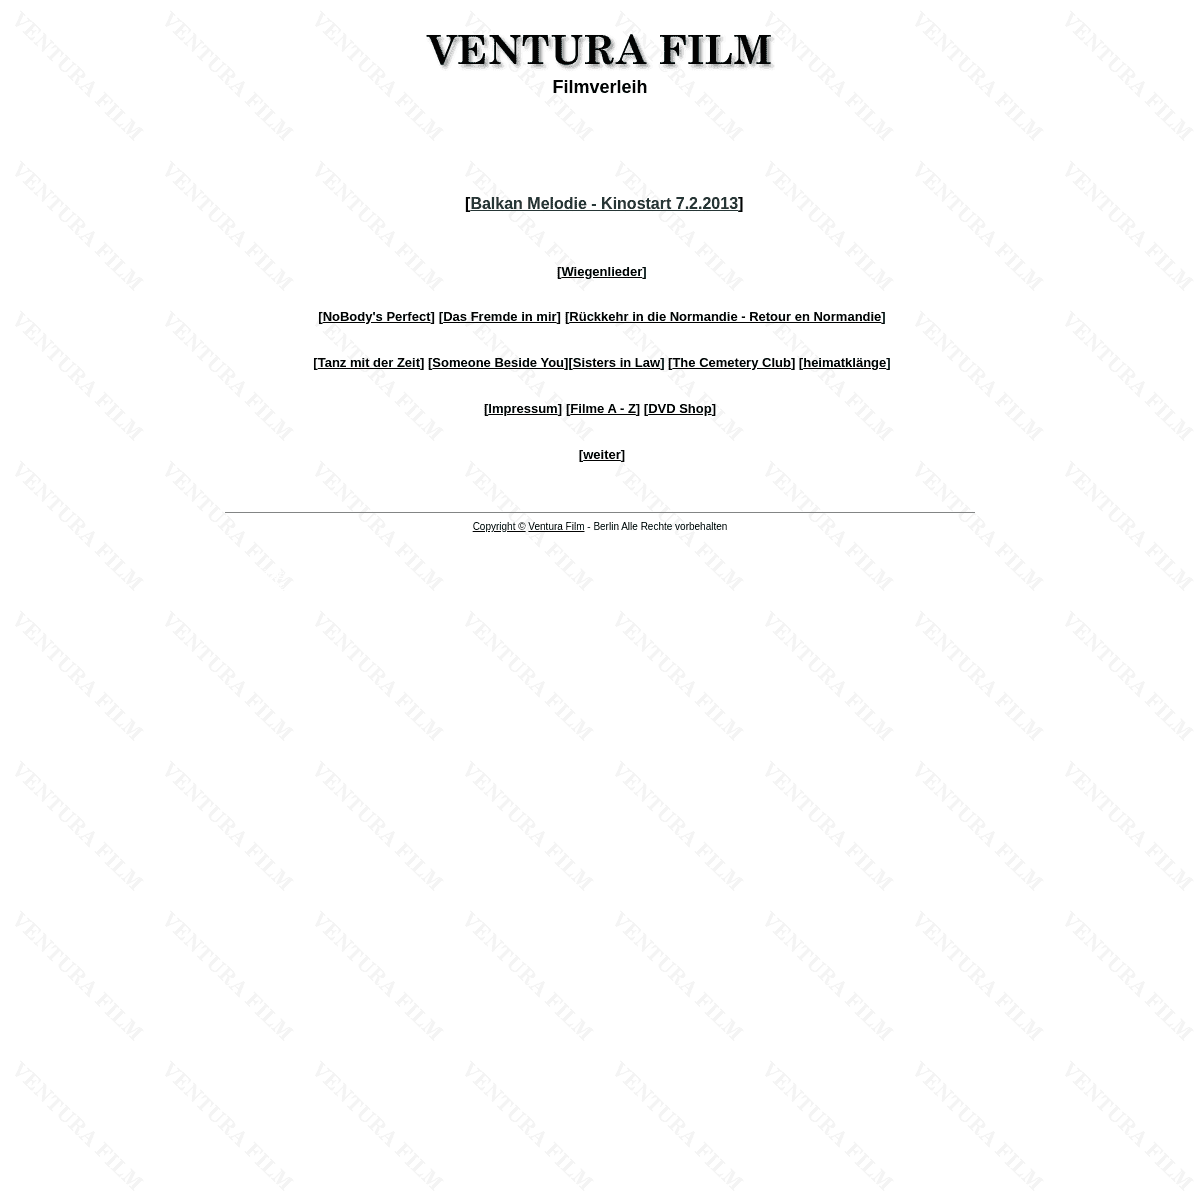 A complete backup of ventura-film.de